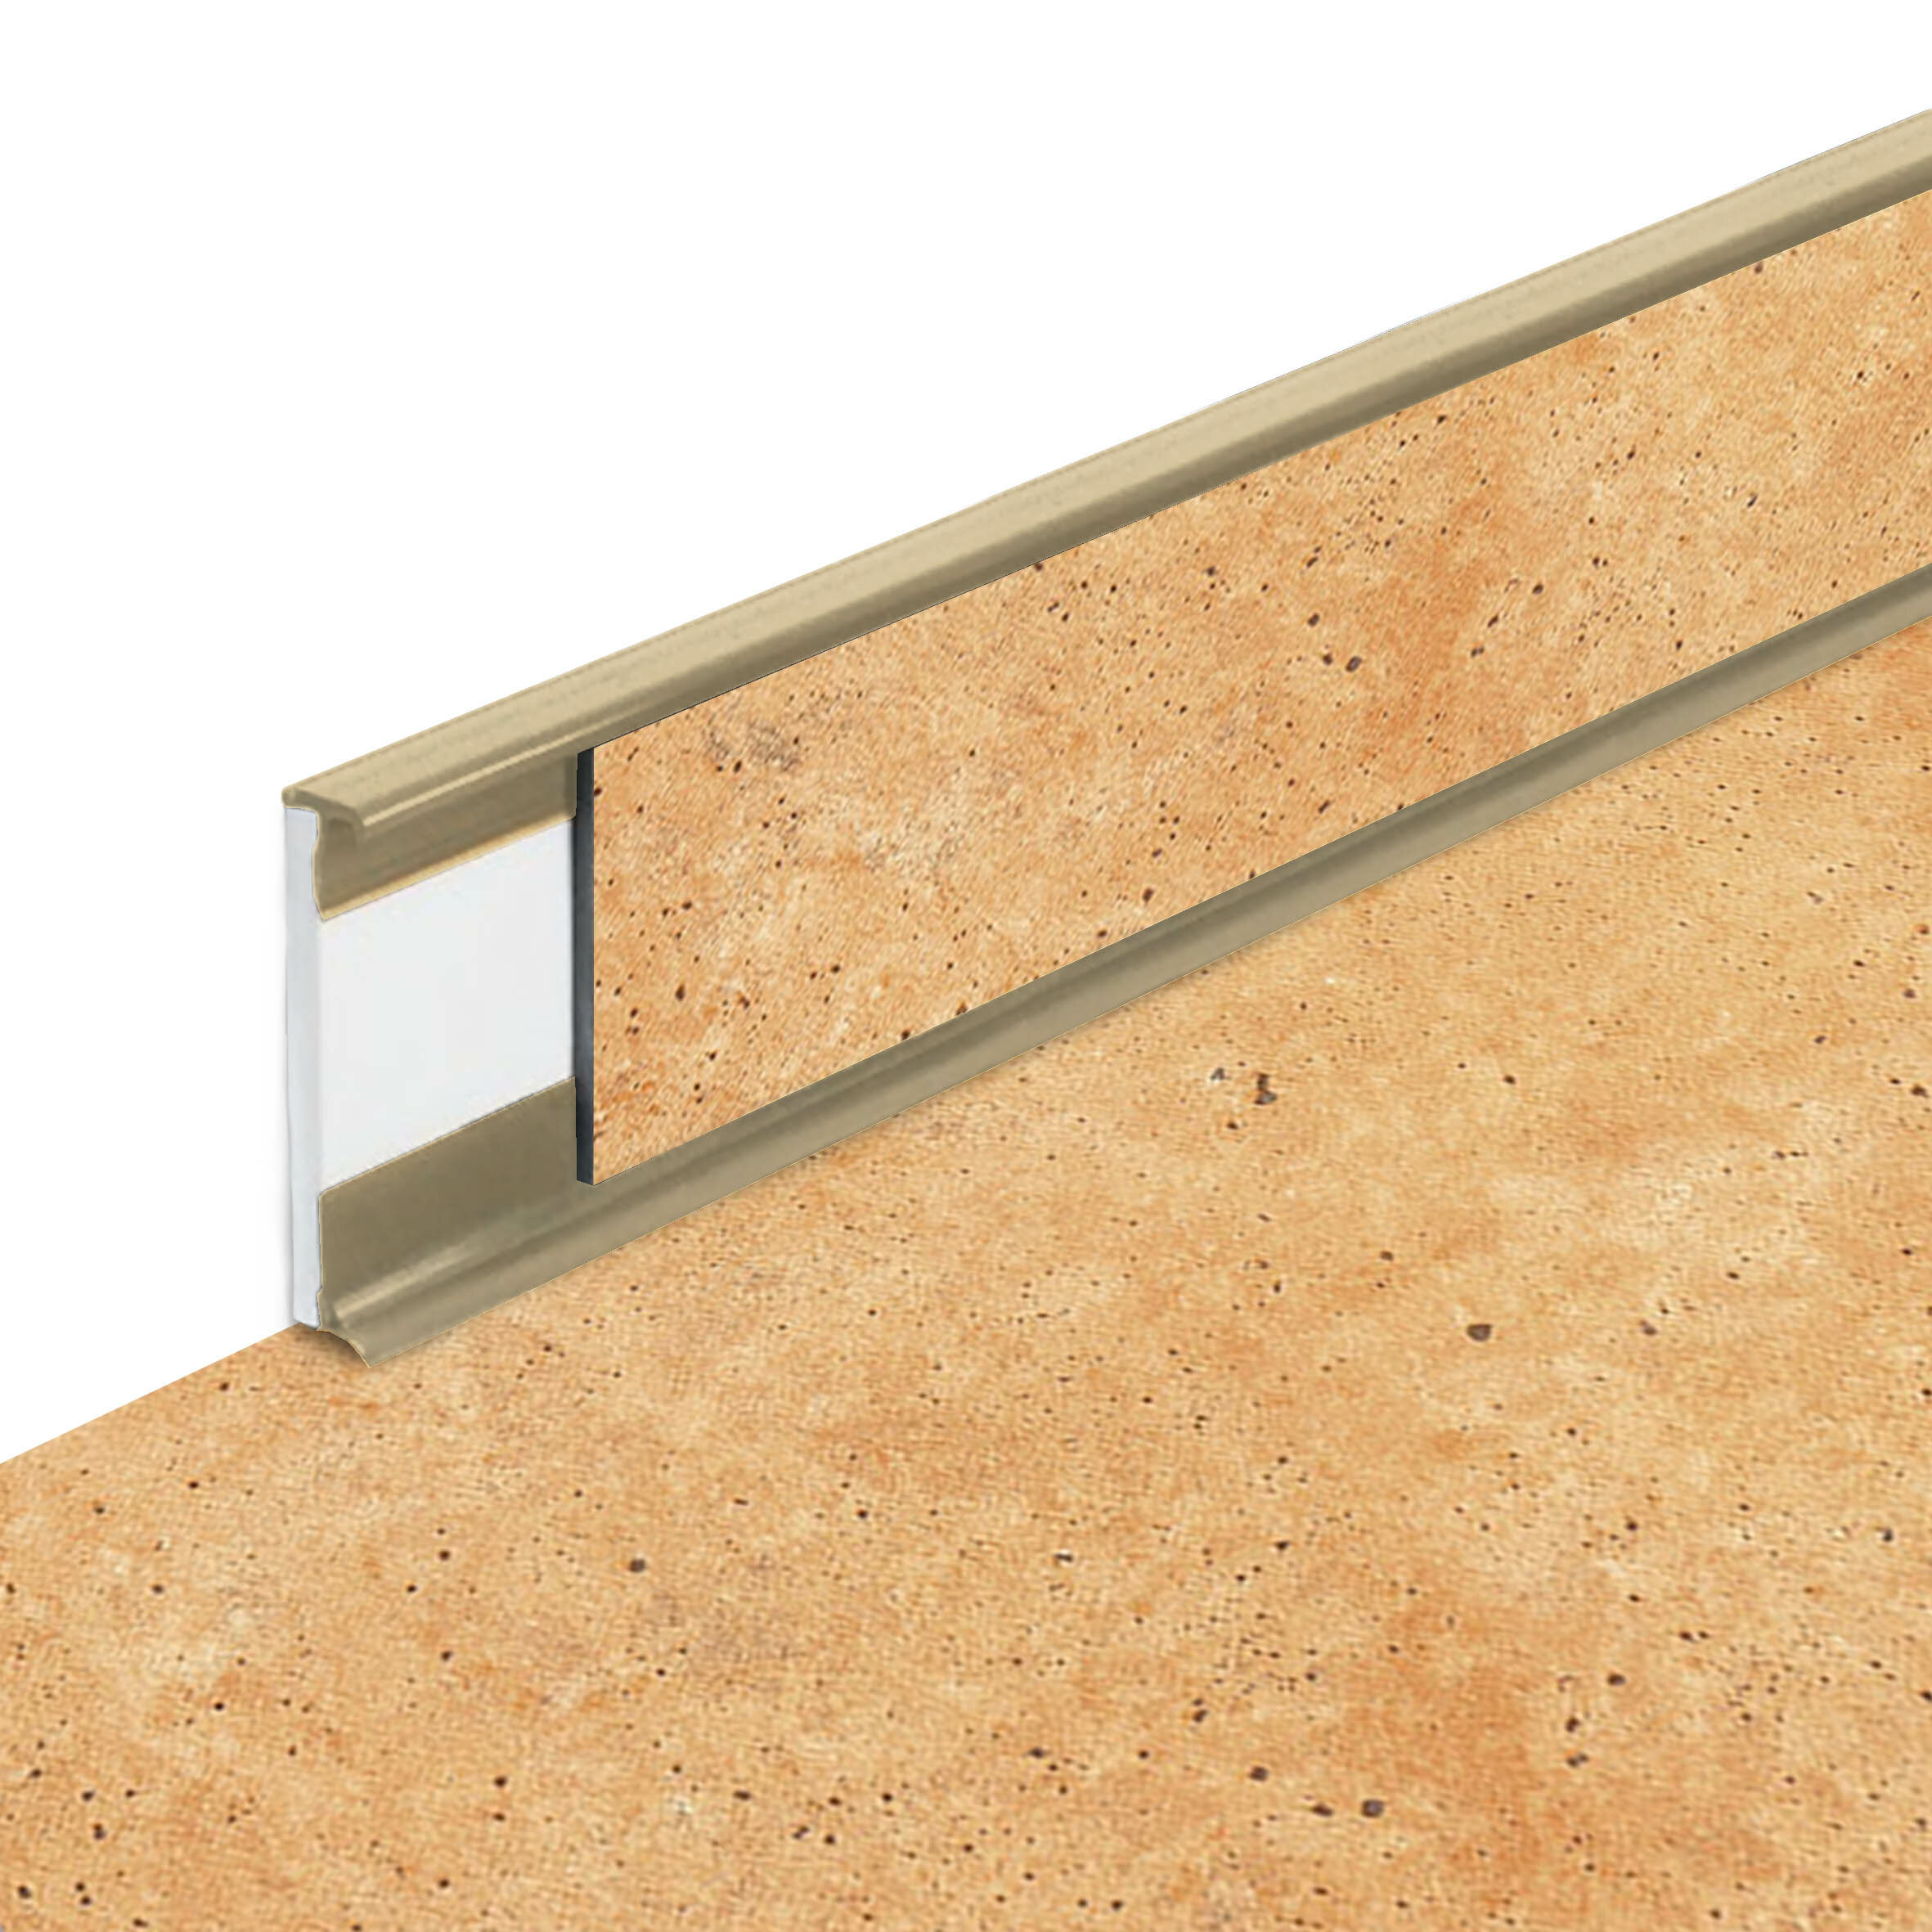 PVC vinylová soklová podlahová lišta Fortelock Business Tornes venus C007 beige - délka 200 cm, výška 5,8 cm, tloušťka 1,2 cm